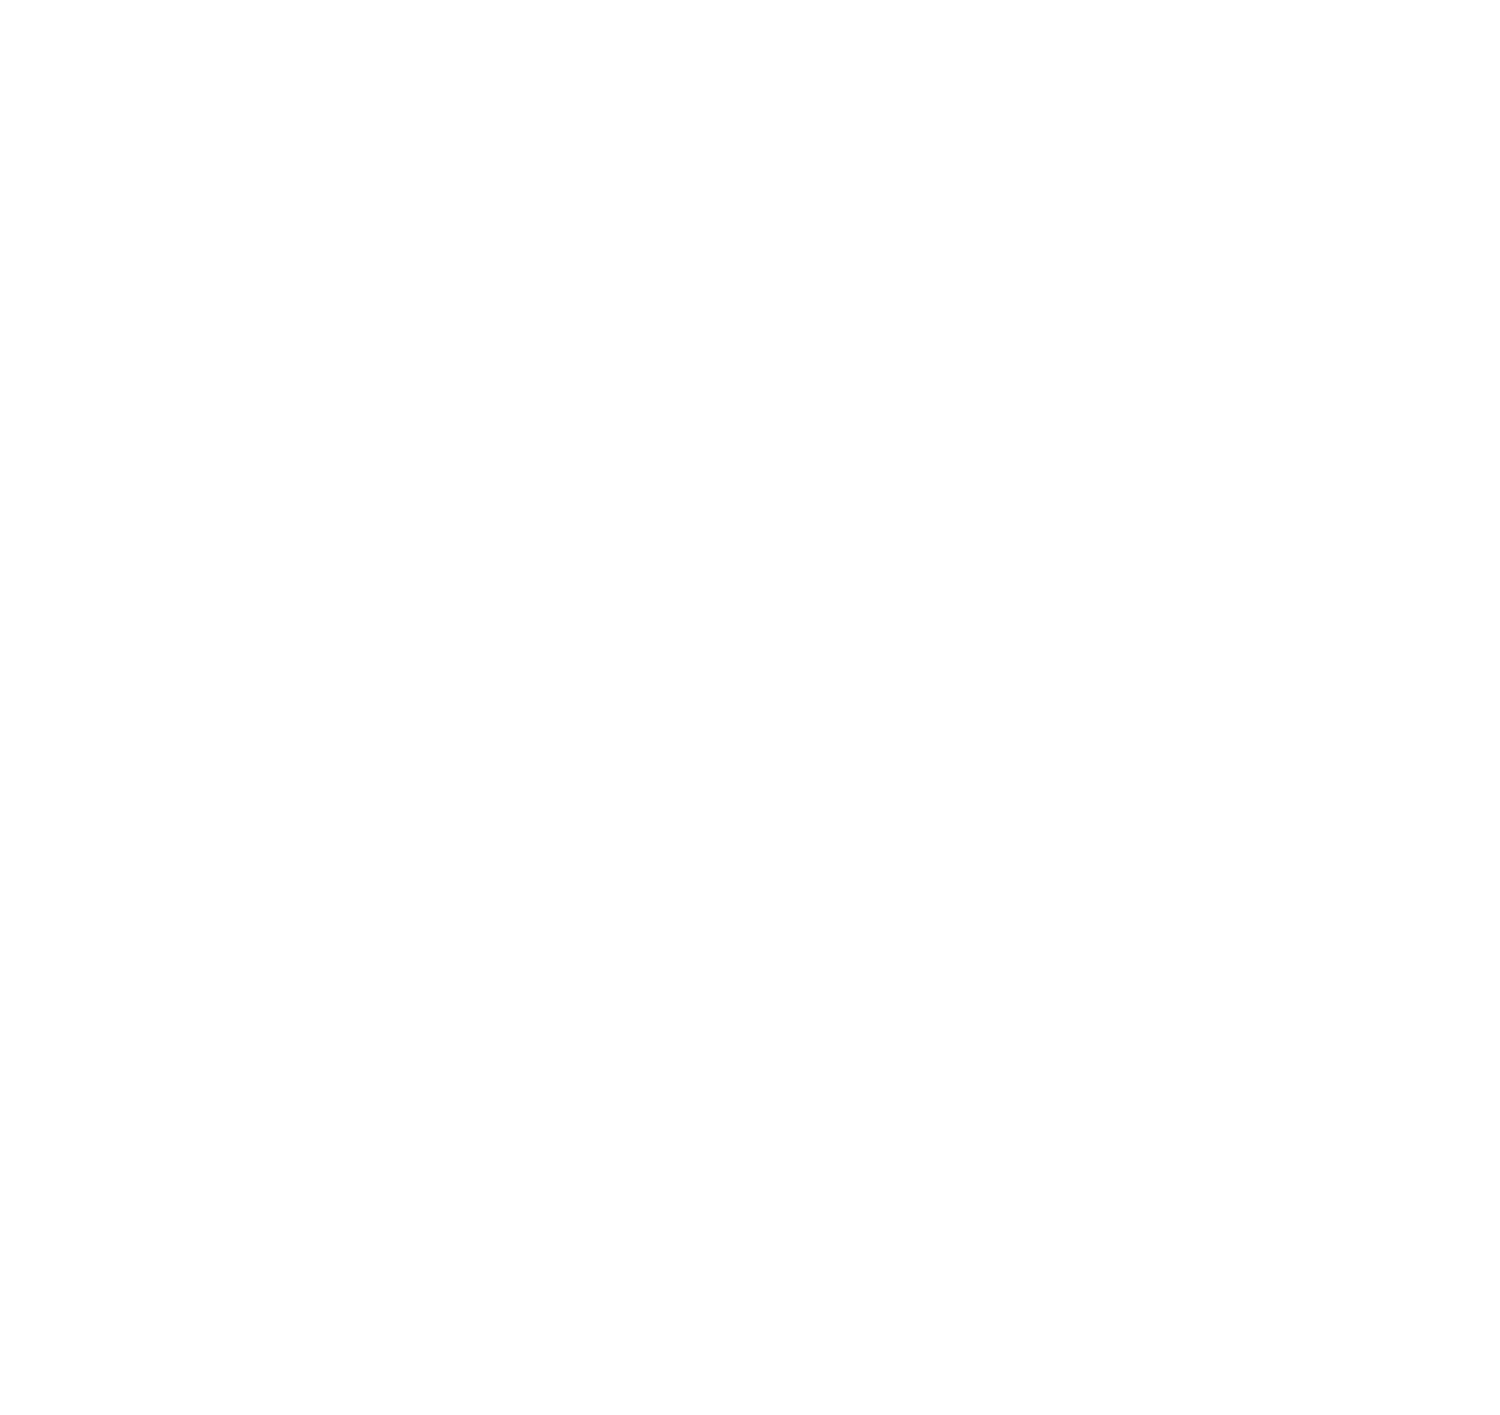 THE PASTURE FARMER